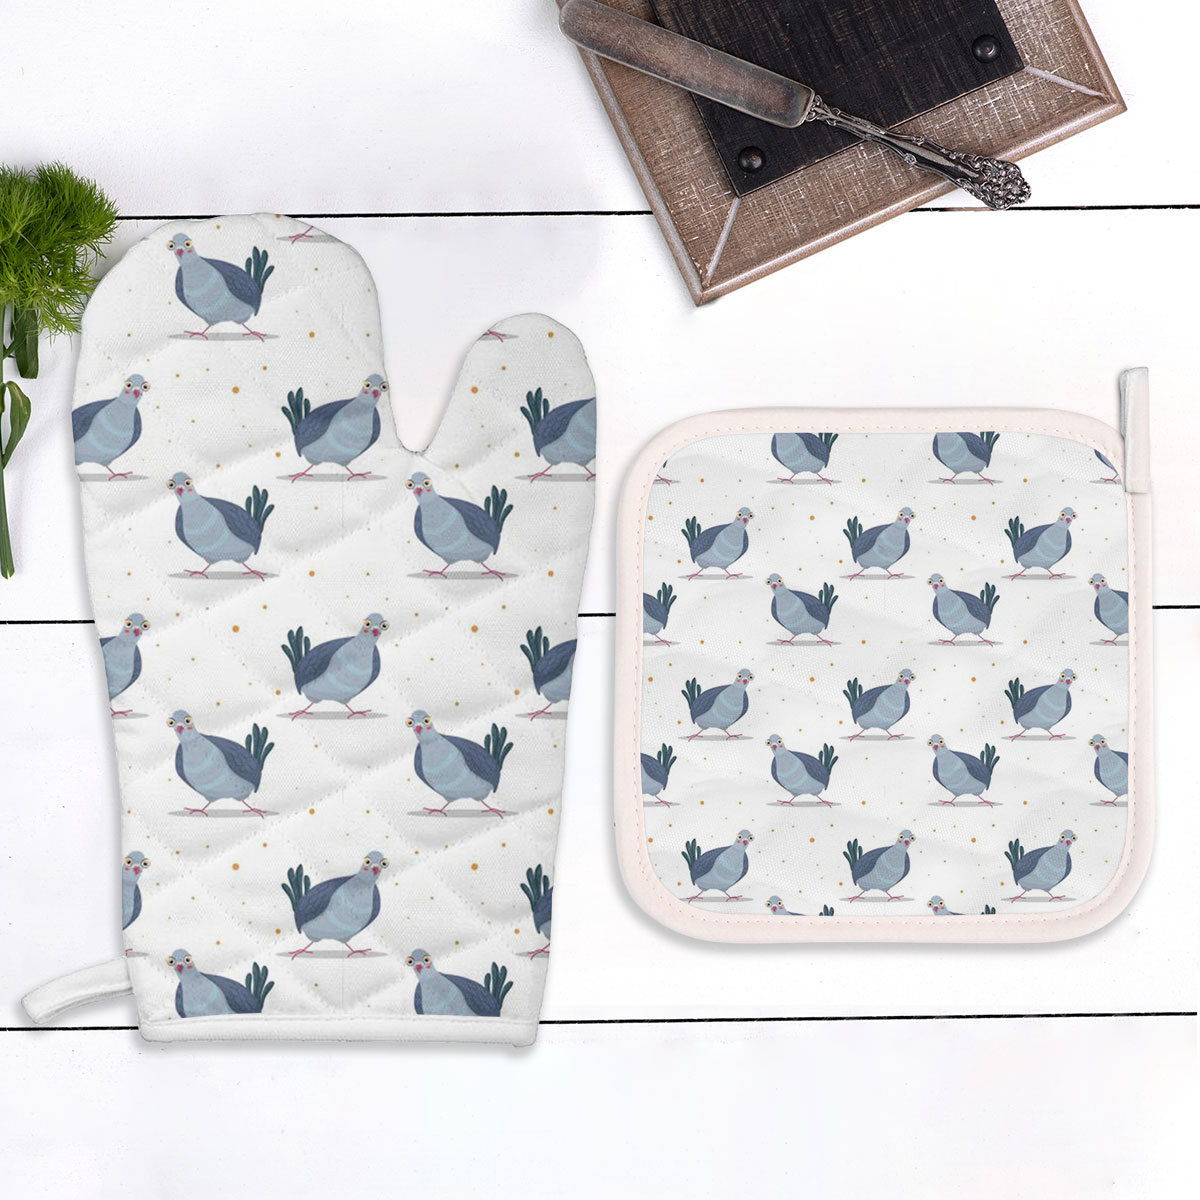 Cute Pigeon Monogram Oven Mitts Pot Holder Set